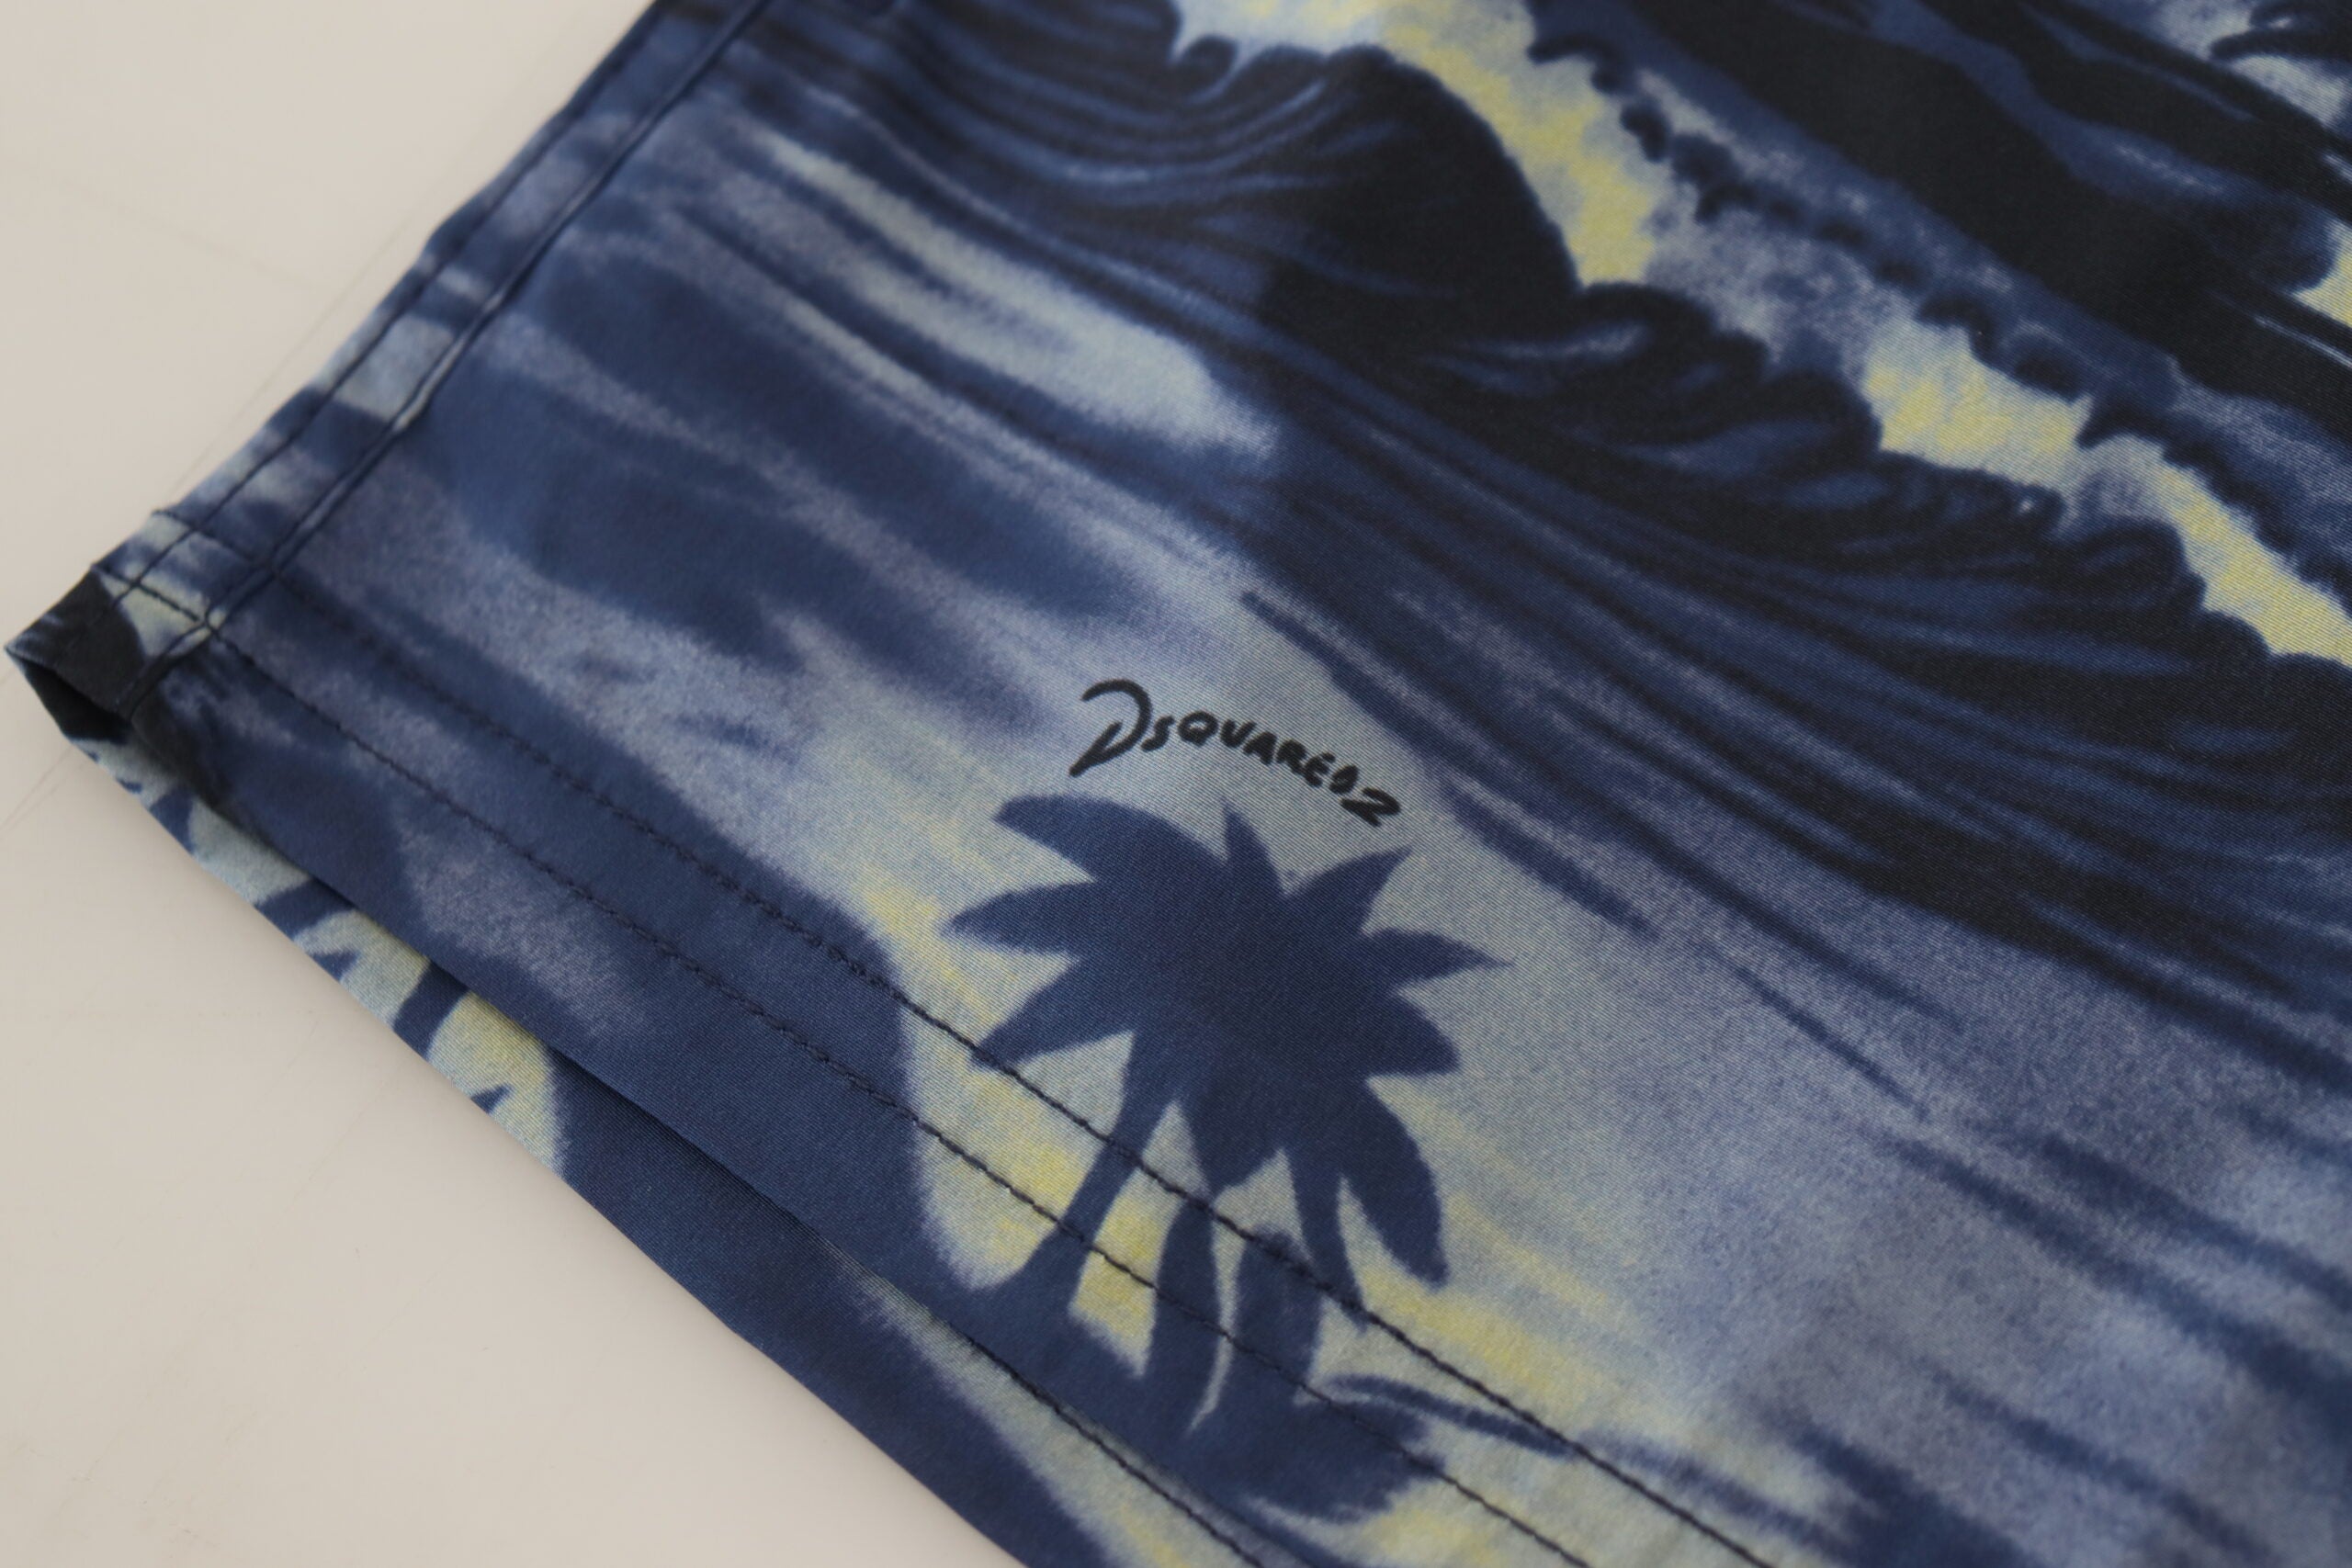 Dsquared² Tropical Wave Design Swim Shorts